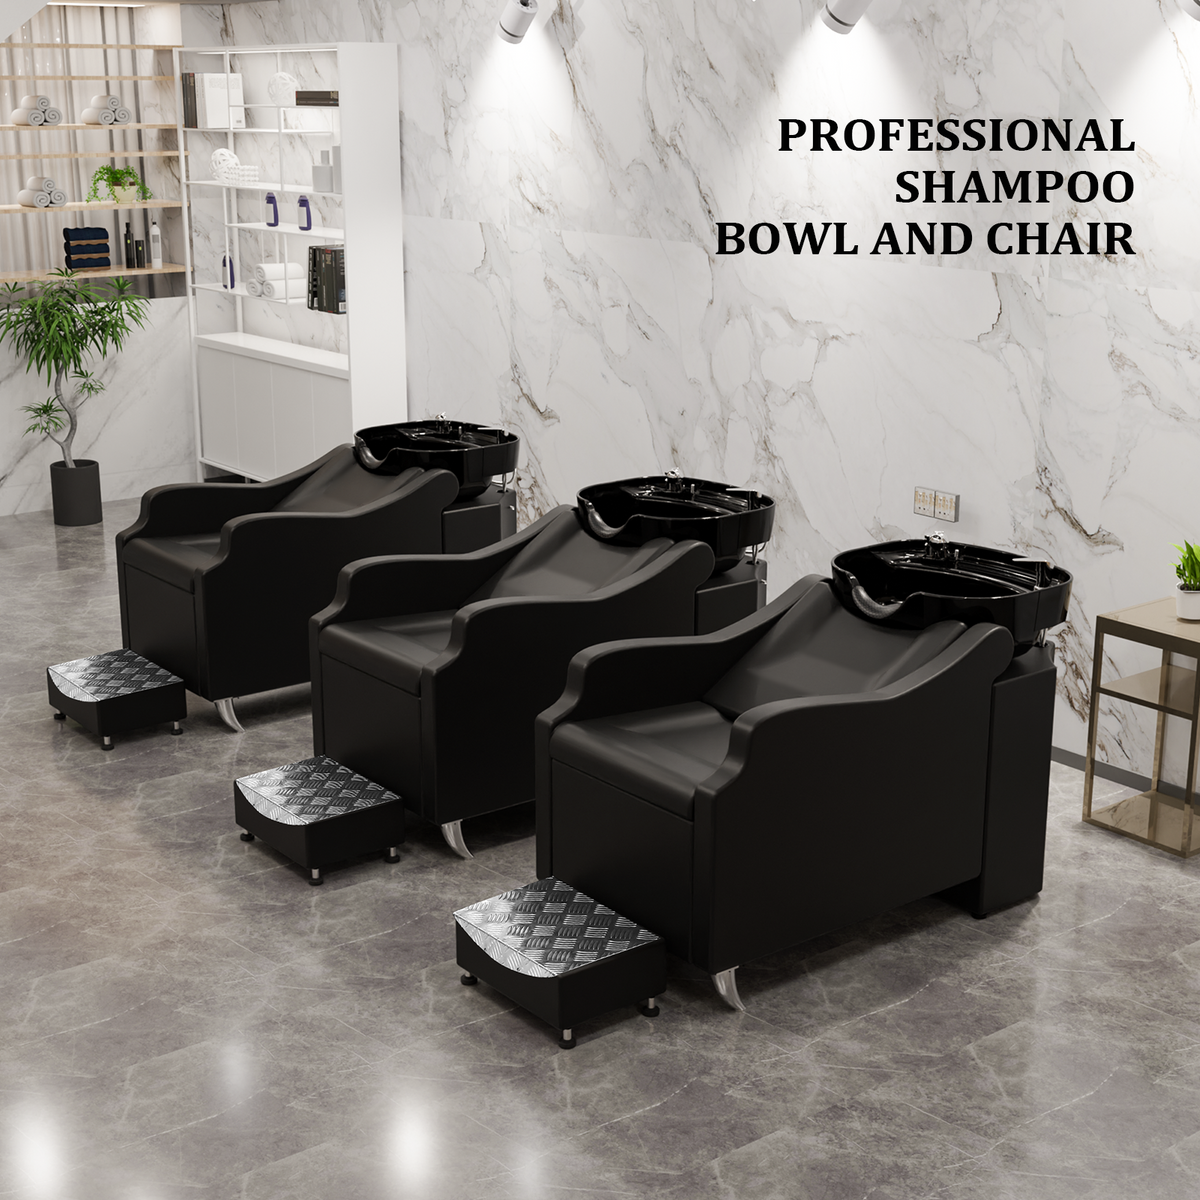 OmySalon Salon Shampoo Bowl and Chair Backwash Unit with Deep Ceramic Sink Freestanding Ottoman Black/White/Mocha